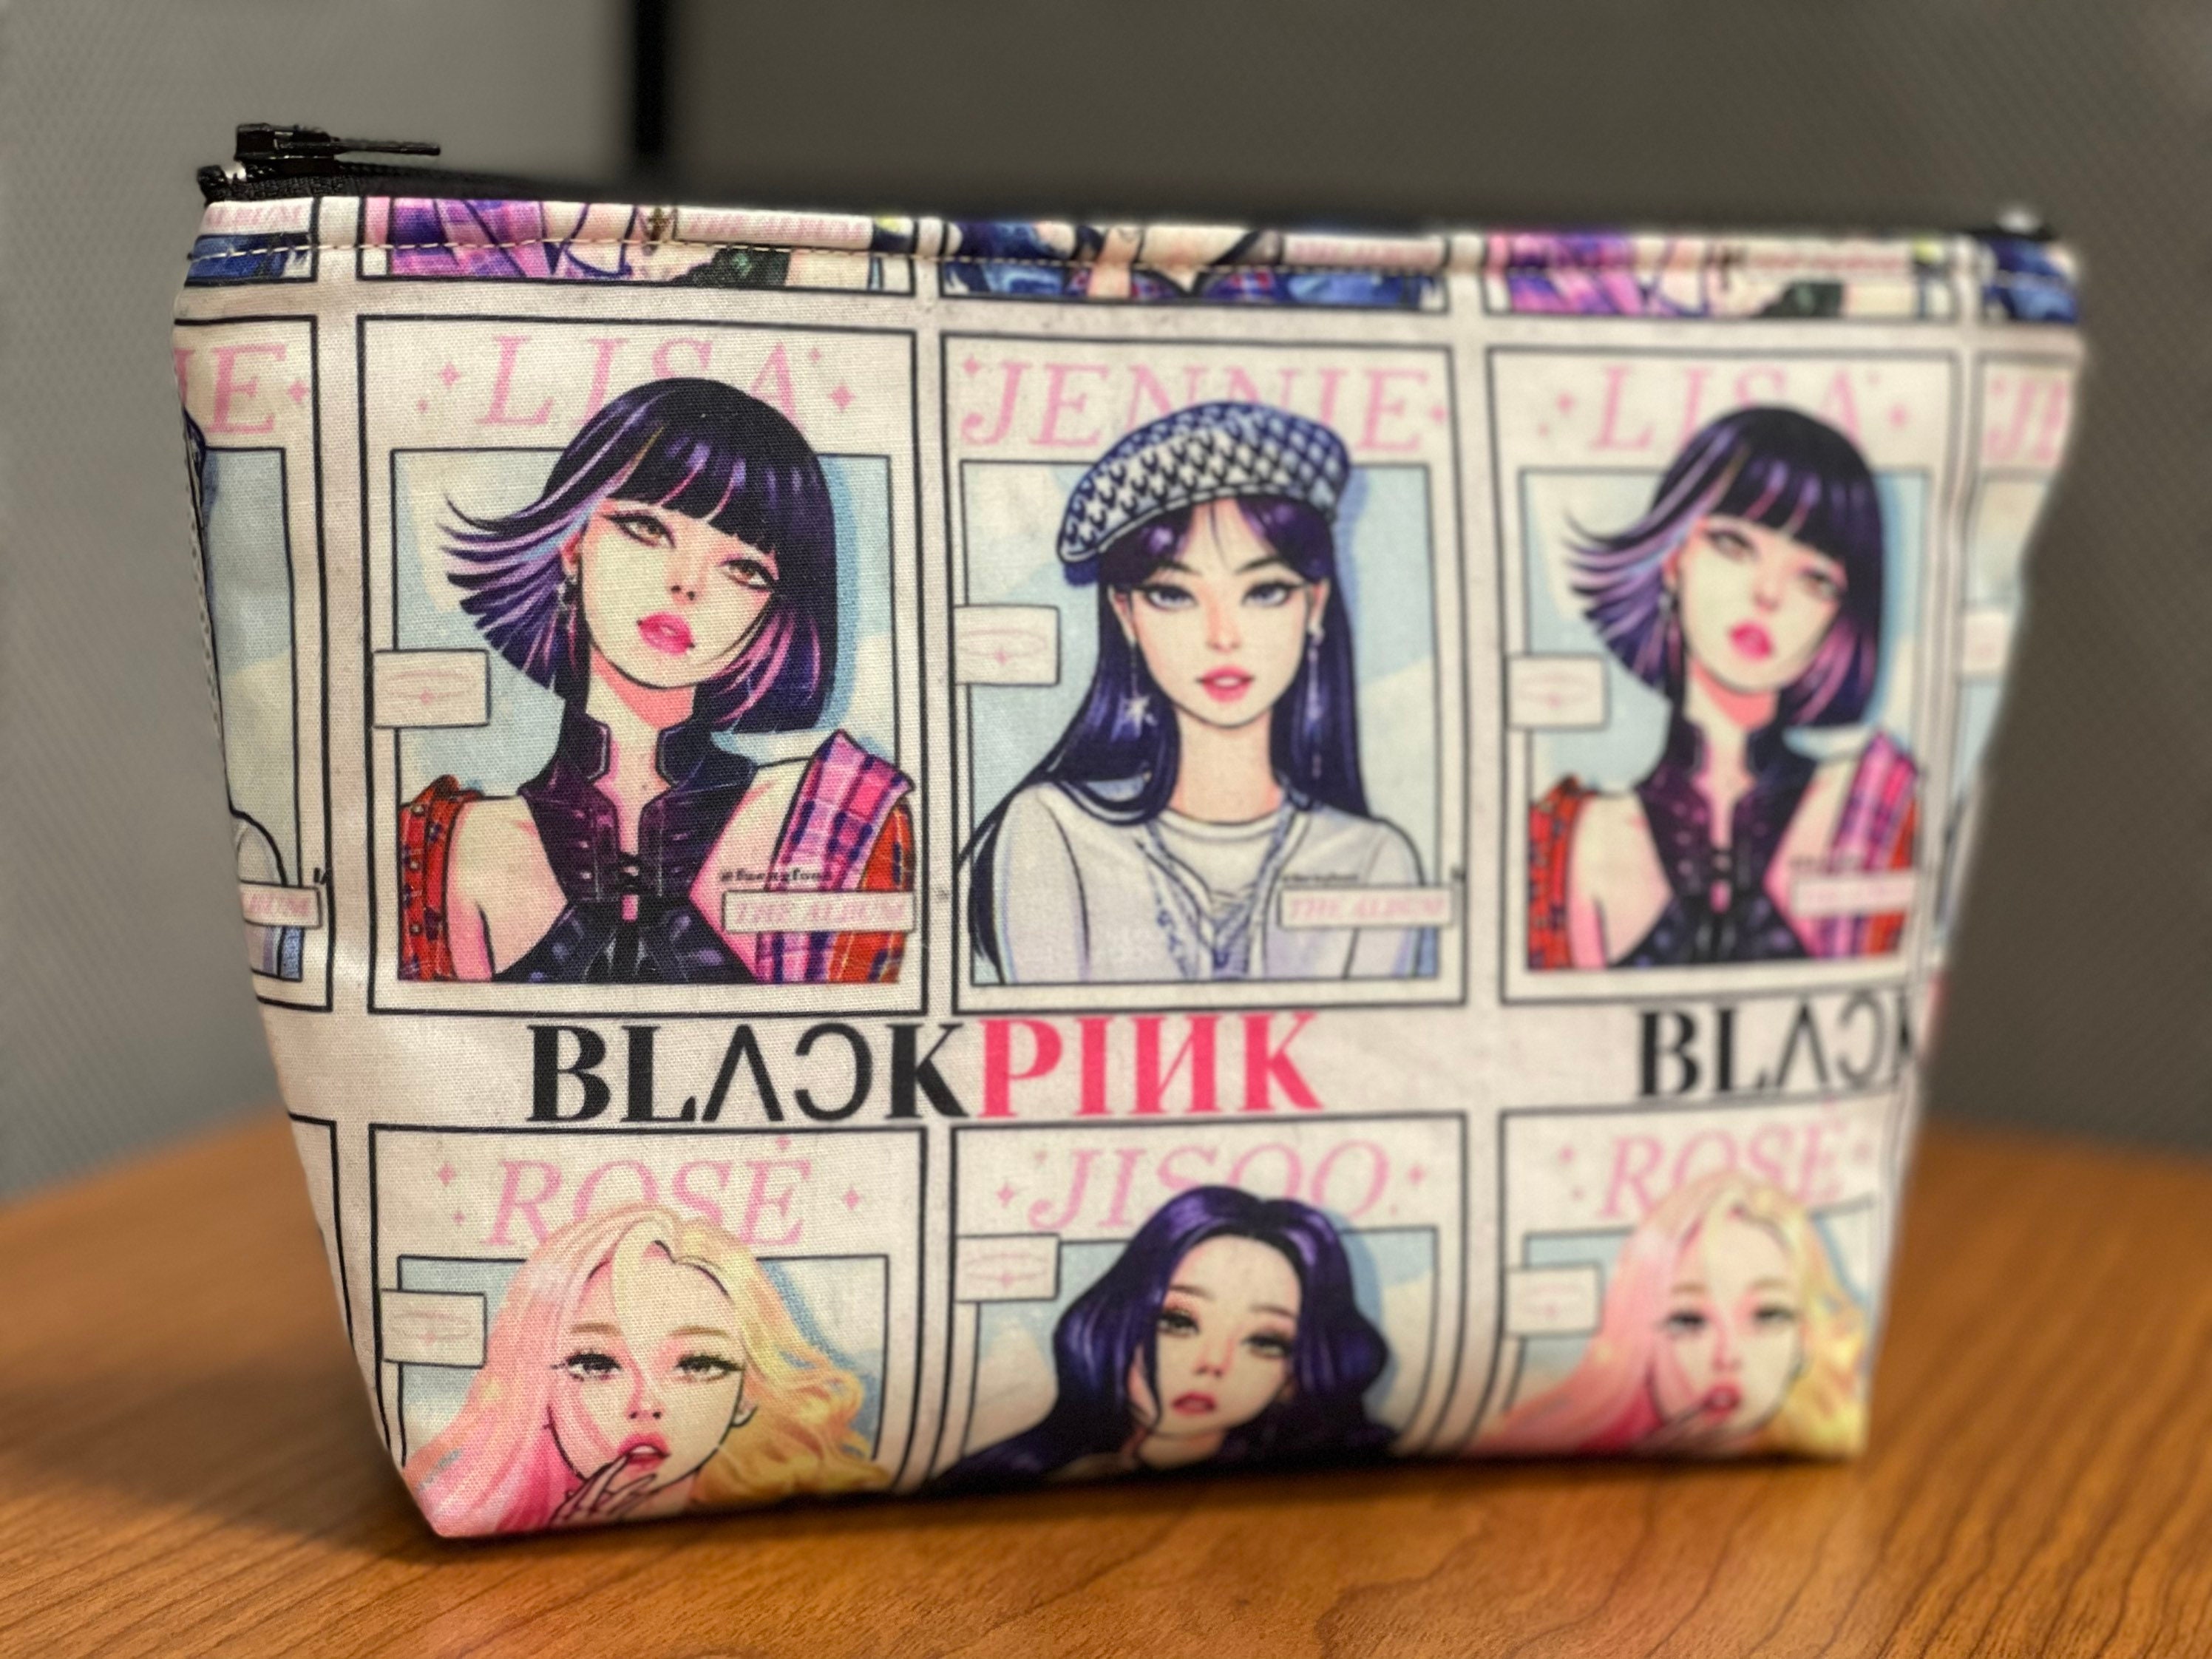 Blackpink Team Pencil Case Girls Printed Pink Pencil Pouch Black